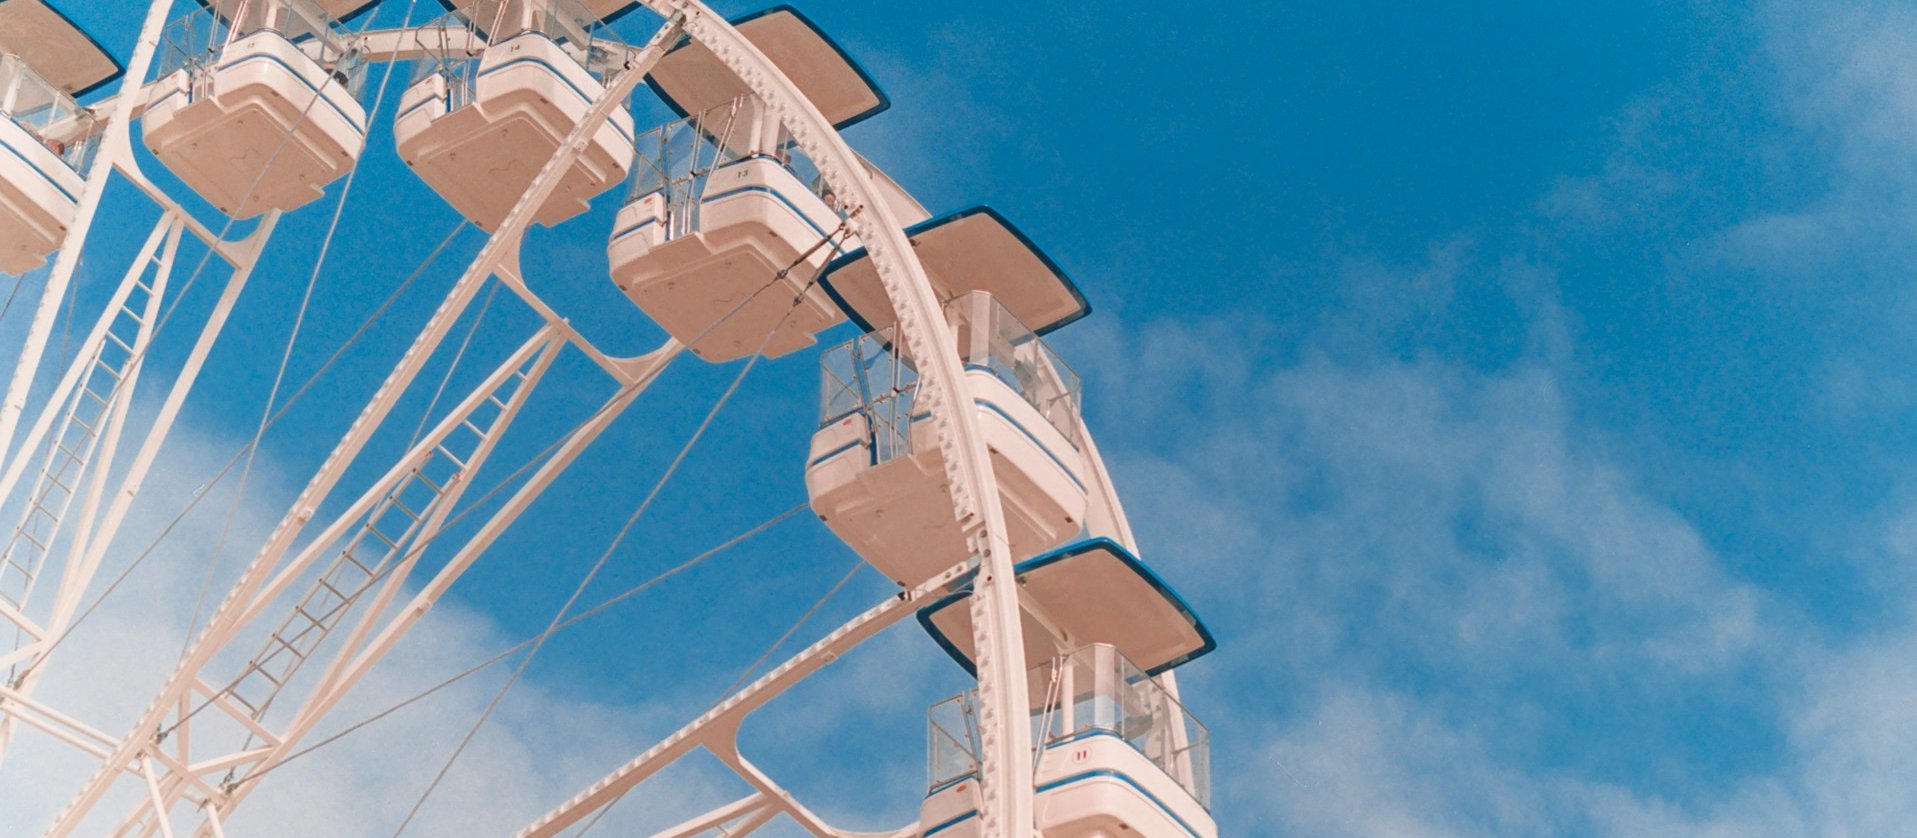 Ferris_wheel_CR _Portuguese_Gravity_on_Unsplash